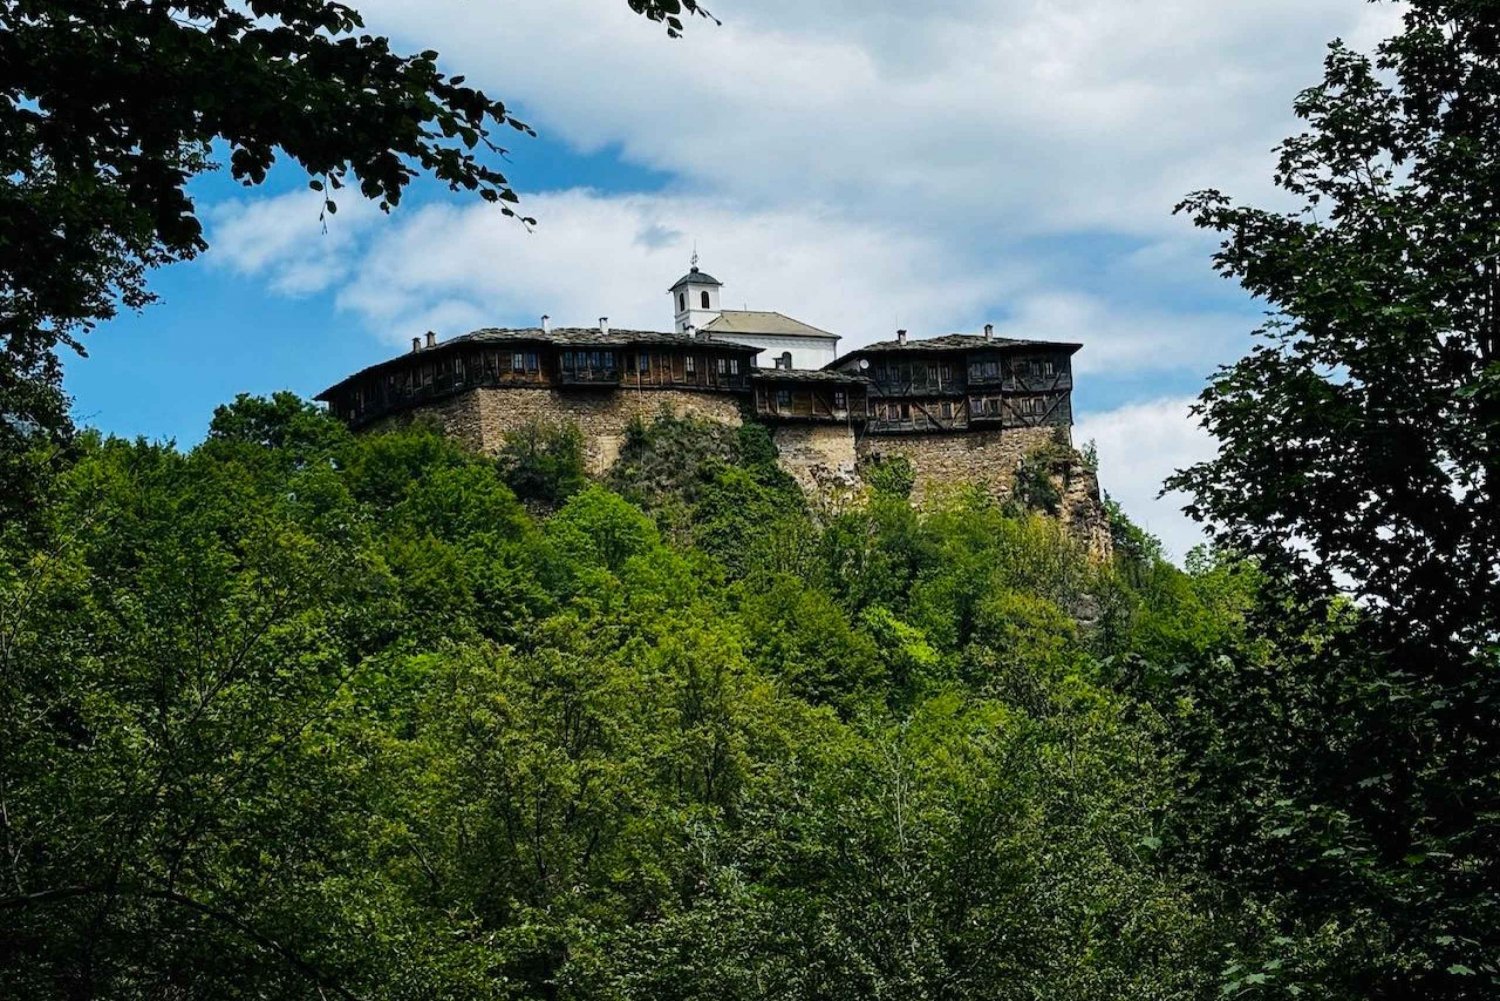 Fra Sofia: Glozhene-klosteret og spasertur i Stara Planina